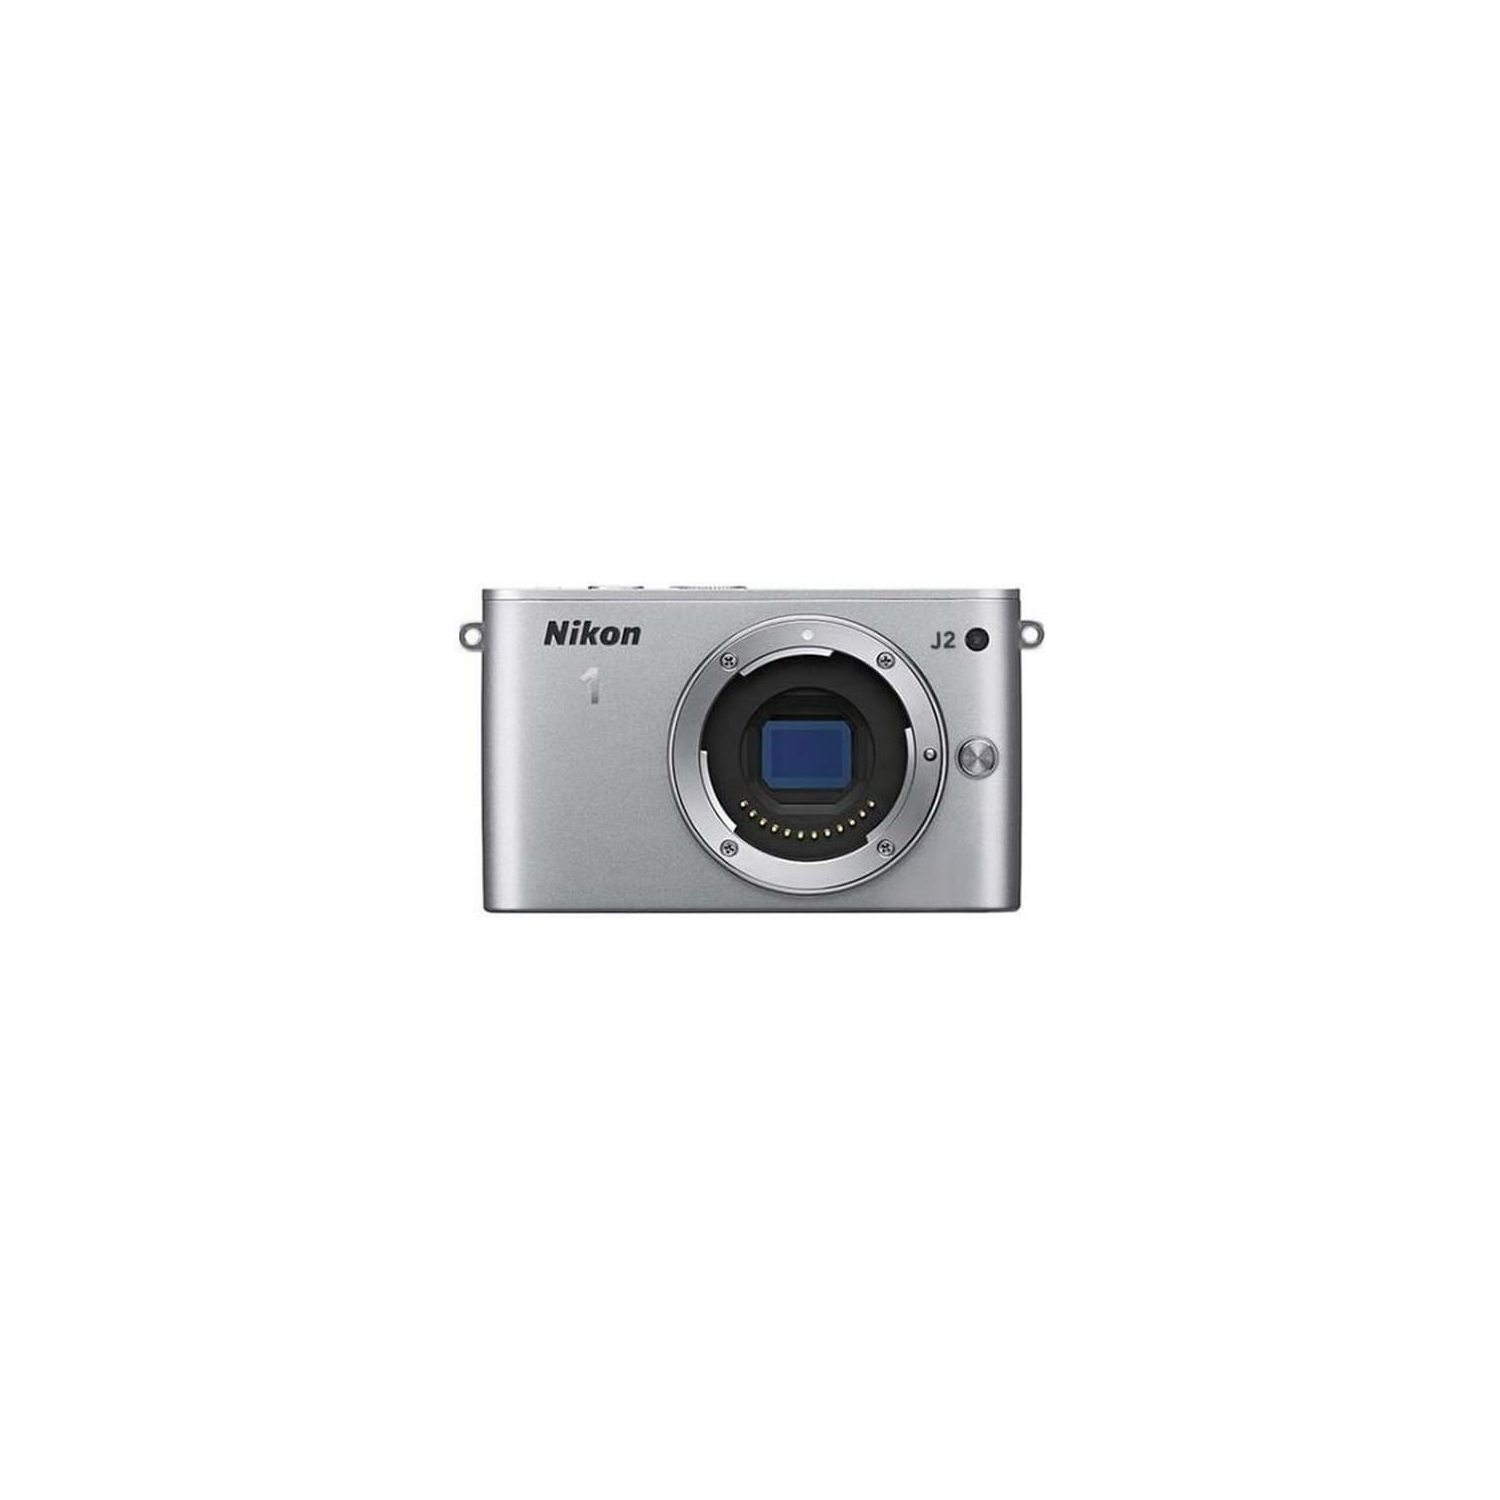 Nikon 1 J2 10.1 MP HD Digital Camera (Silver) Body Only